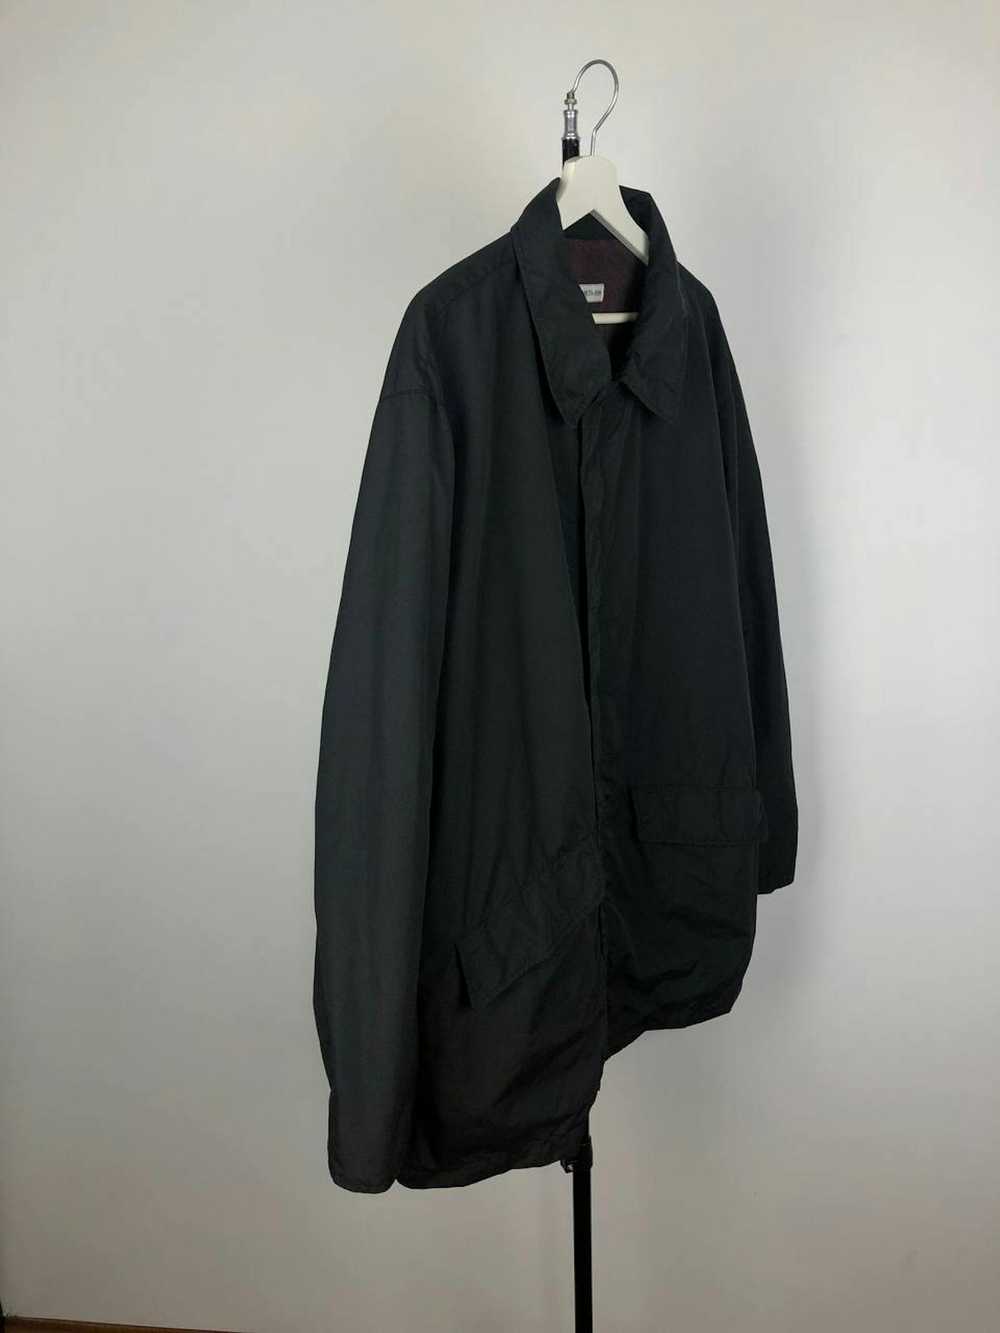 Cerruti 1881 Cerutti 1881 Vintage Jacket Black si… - image 5